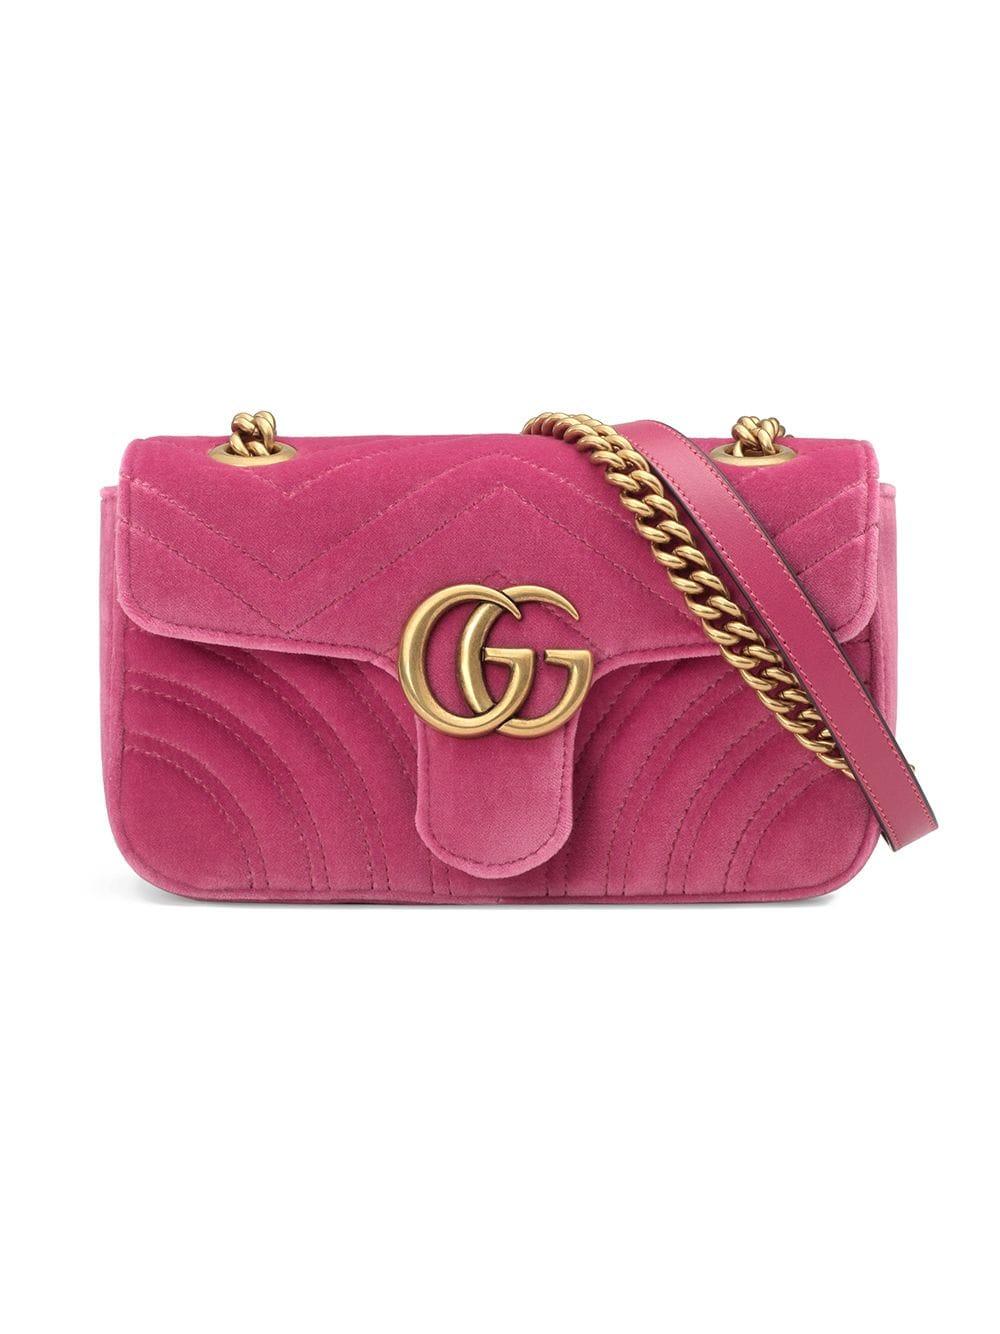 Gucci GG Marmont Matelasse Velvet Small Pink in Velvet with Gold